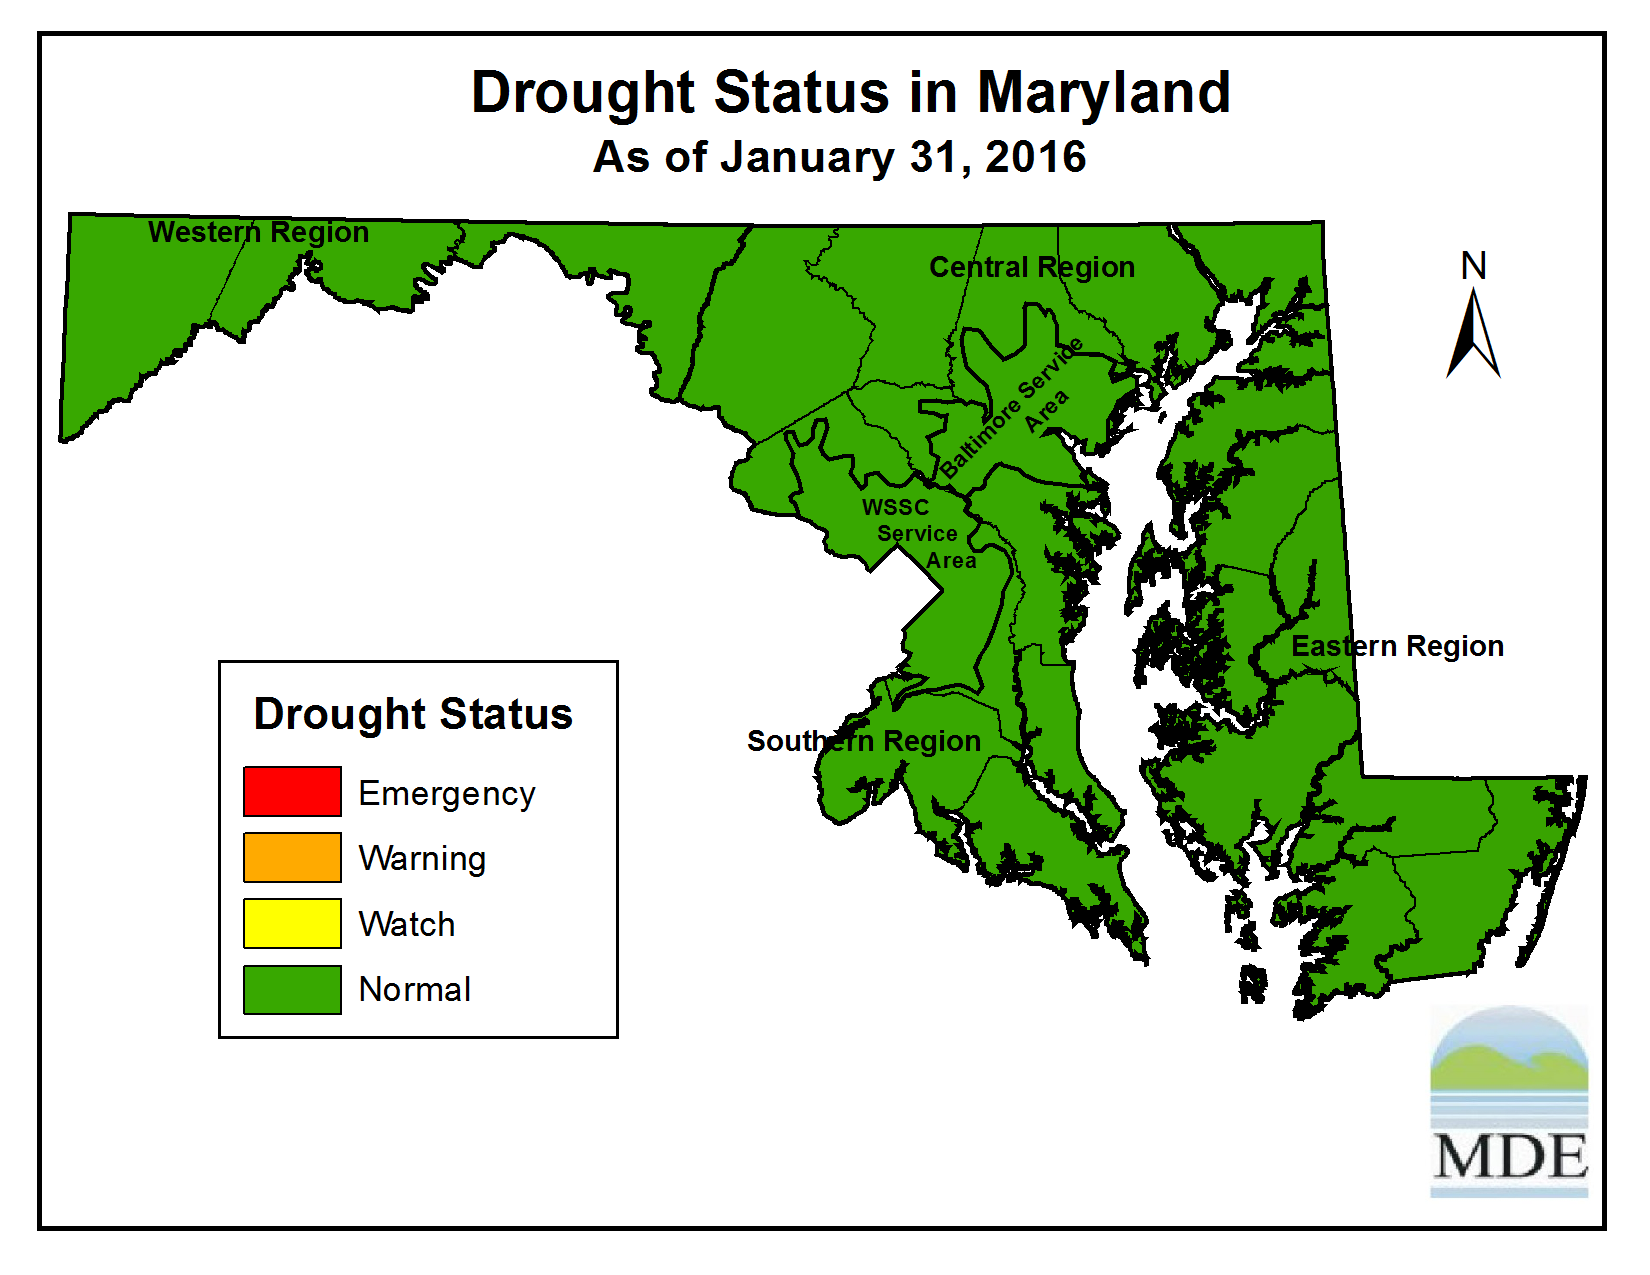 Drought Status as of January 31, 2016